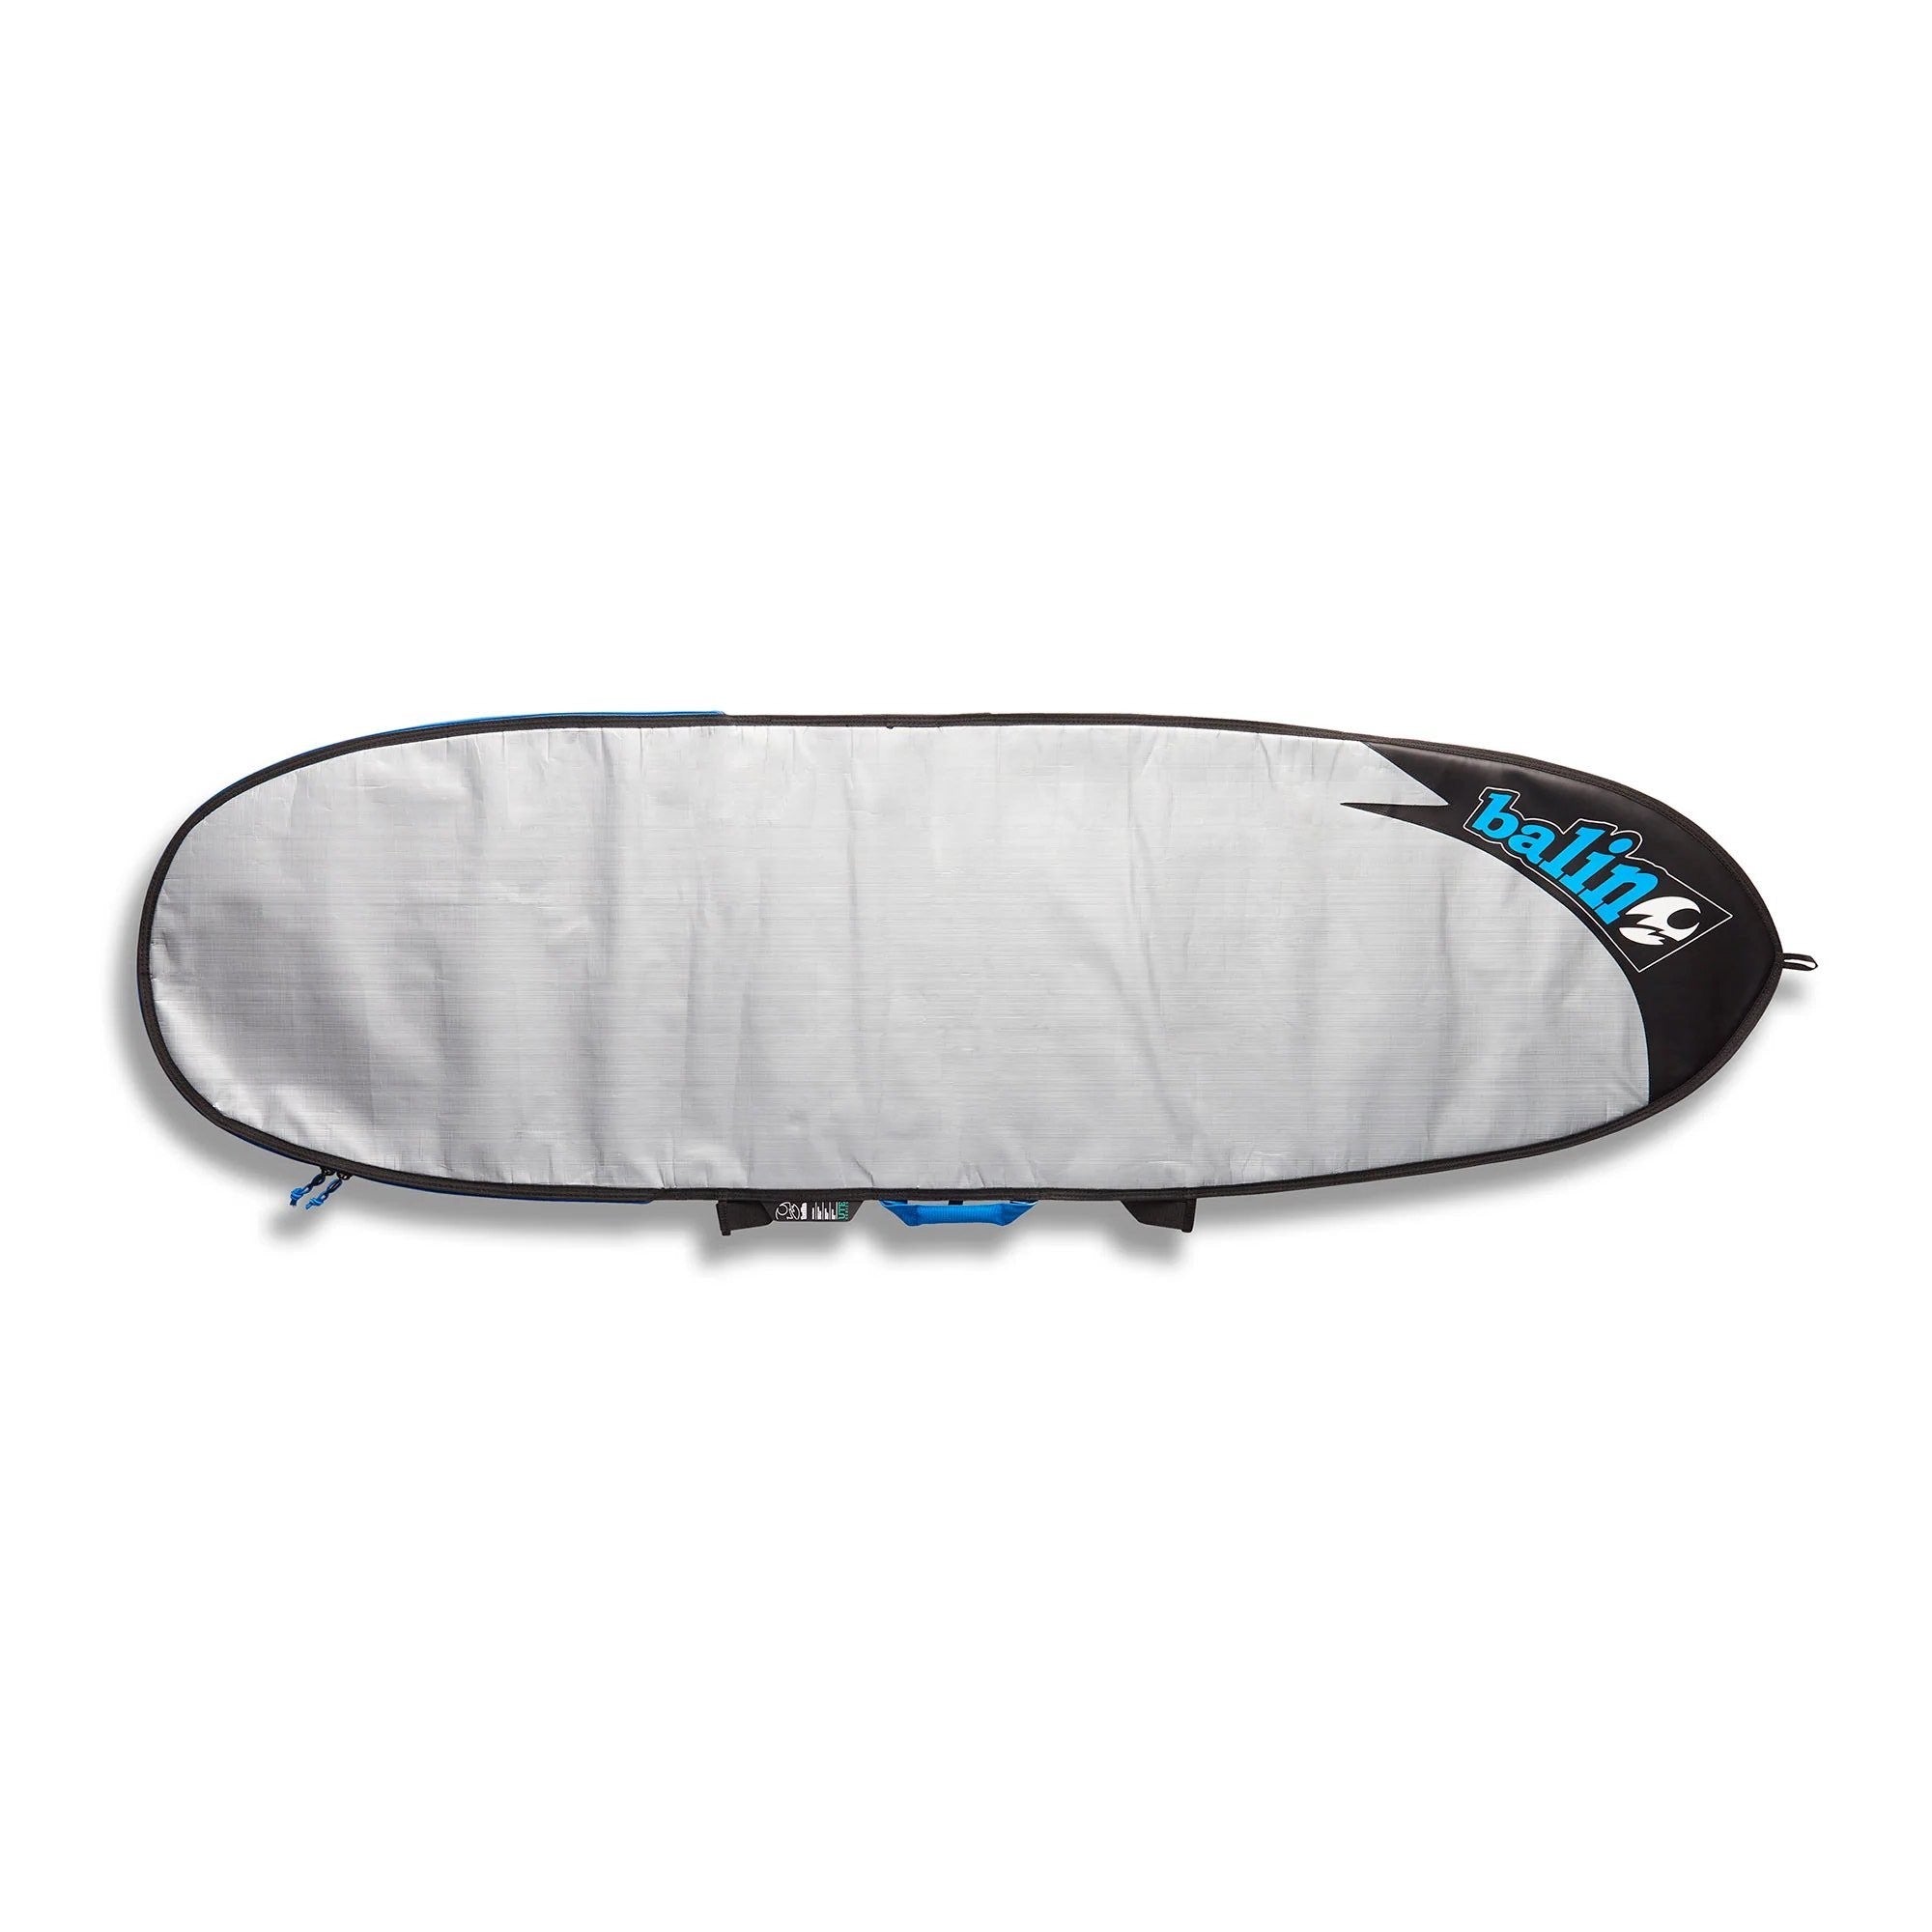 BALIN - Surfboard cover 1 board - UTE - Mini Malibu 5mm - Blue